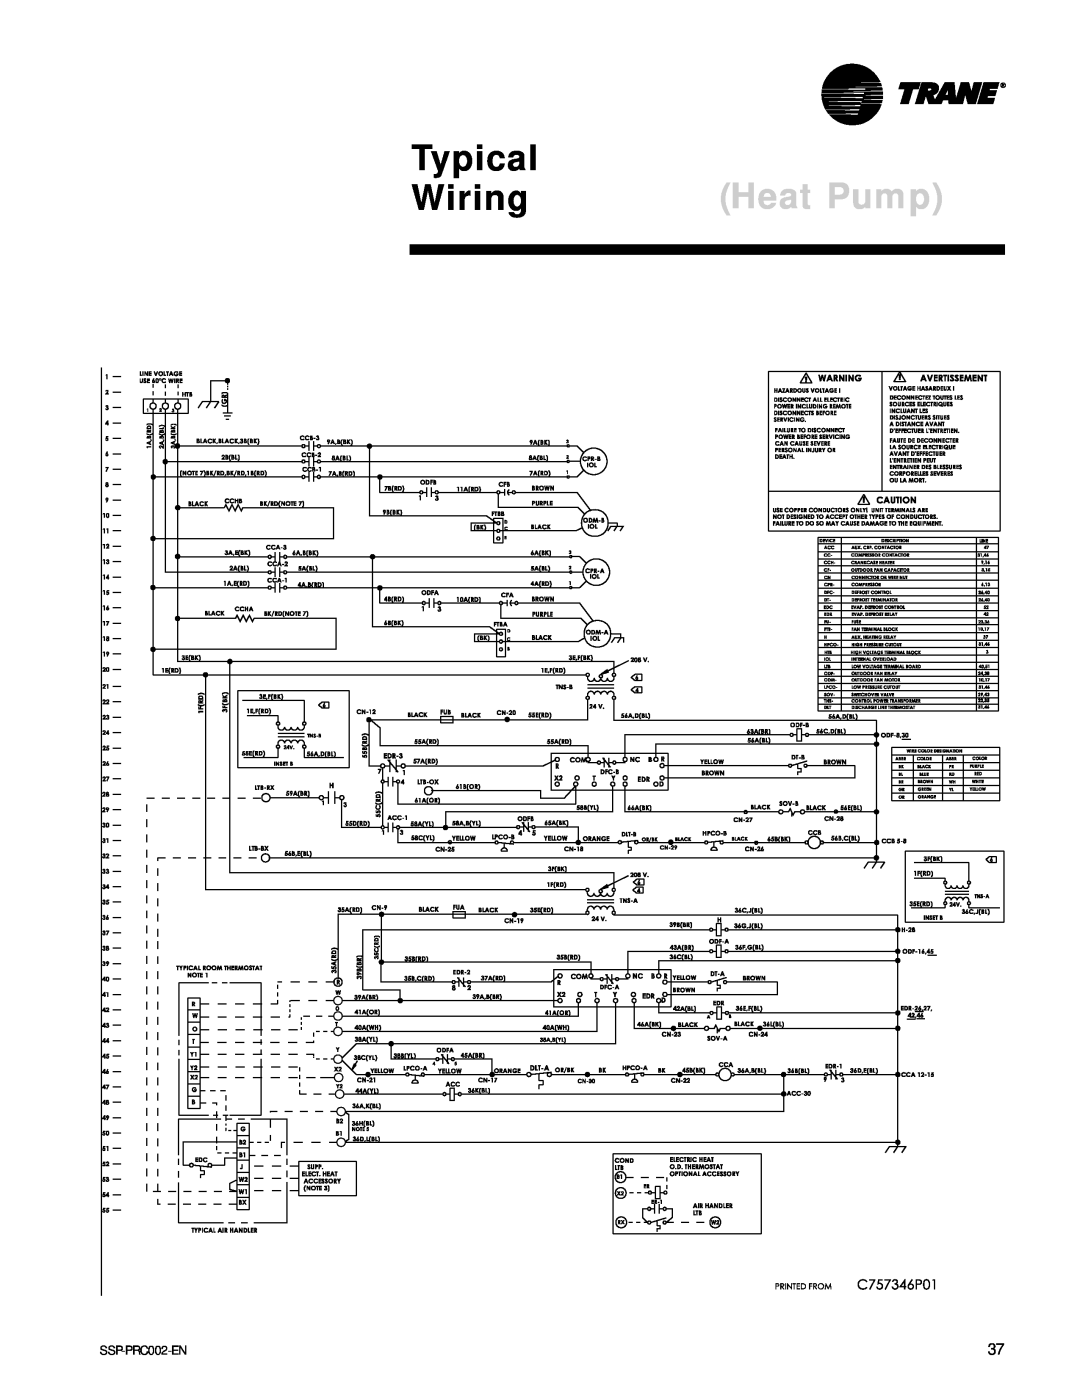 Trane TWE200B, TWA075A, TWA200B, TWE050A manual Typical, Heat Pump, Wiring 